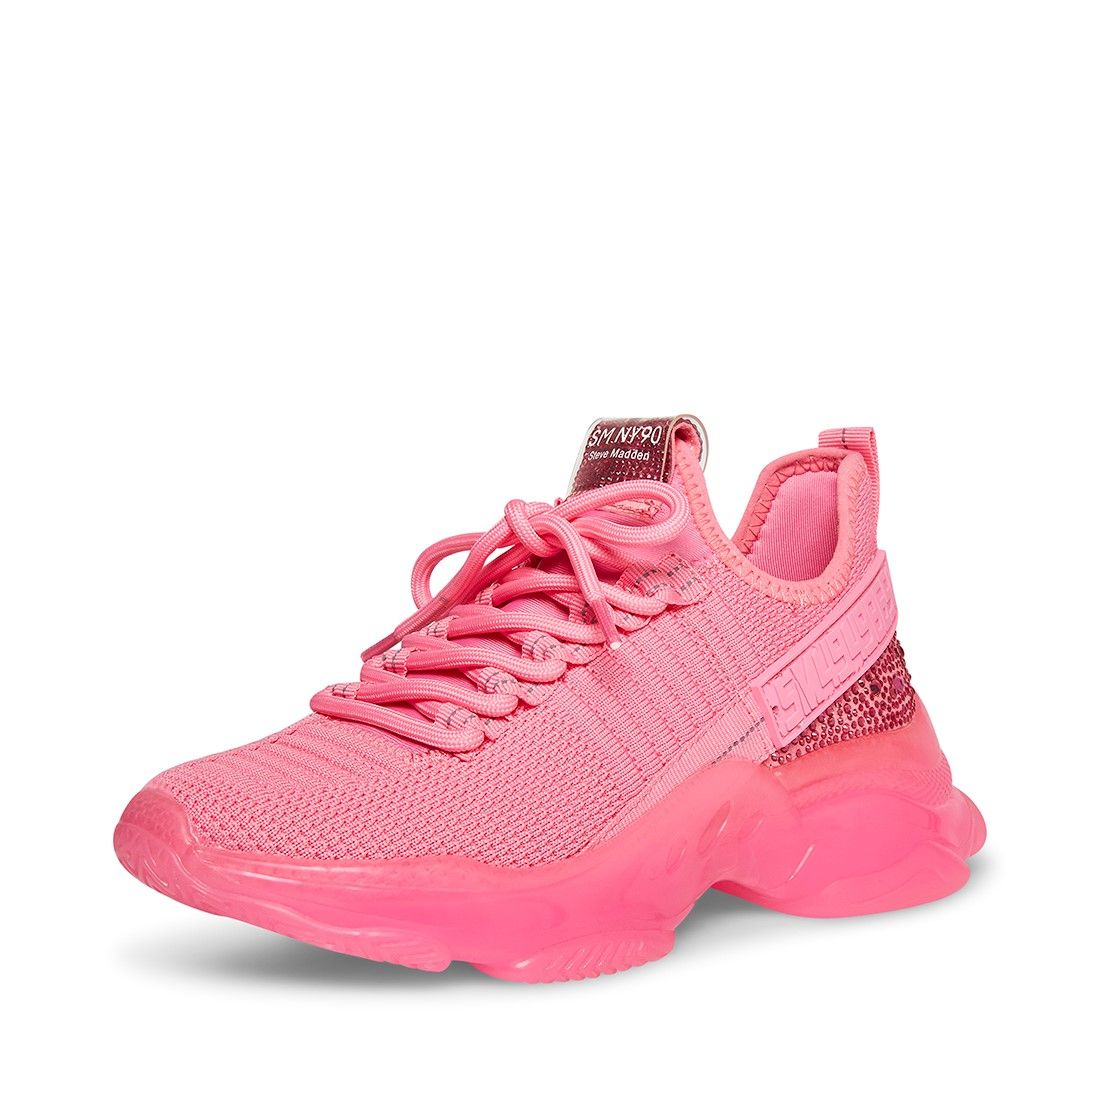 Steve Madden MAXIMA Hot Pink Lace Up Chunky Rhinestone Boyfriend Low Top Sneaker (HOT PINK, 6.5) | Walmart (US)